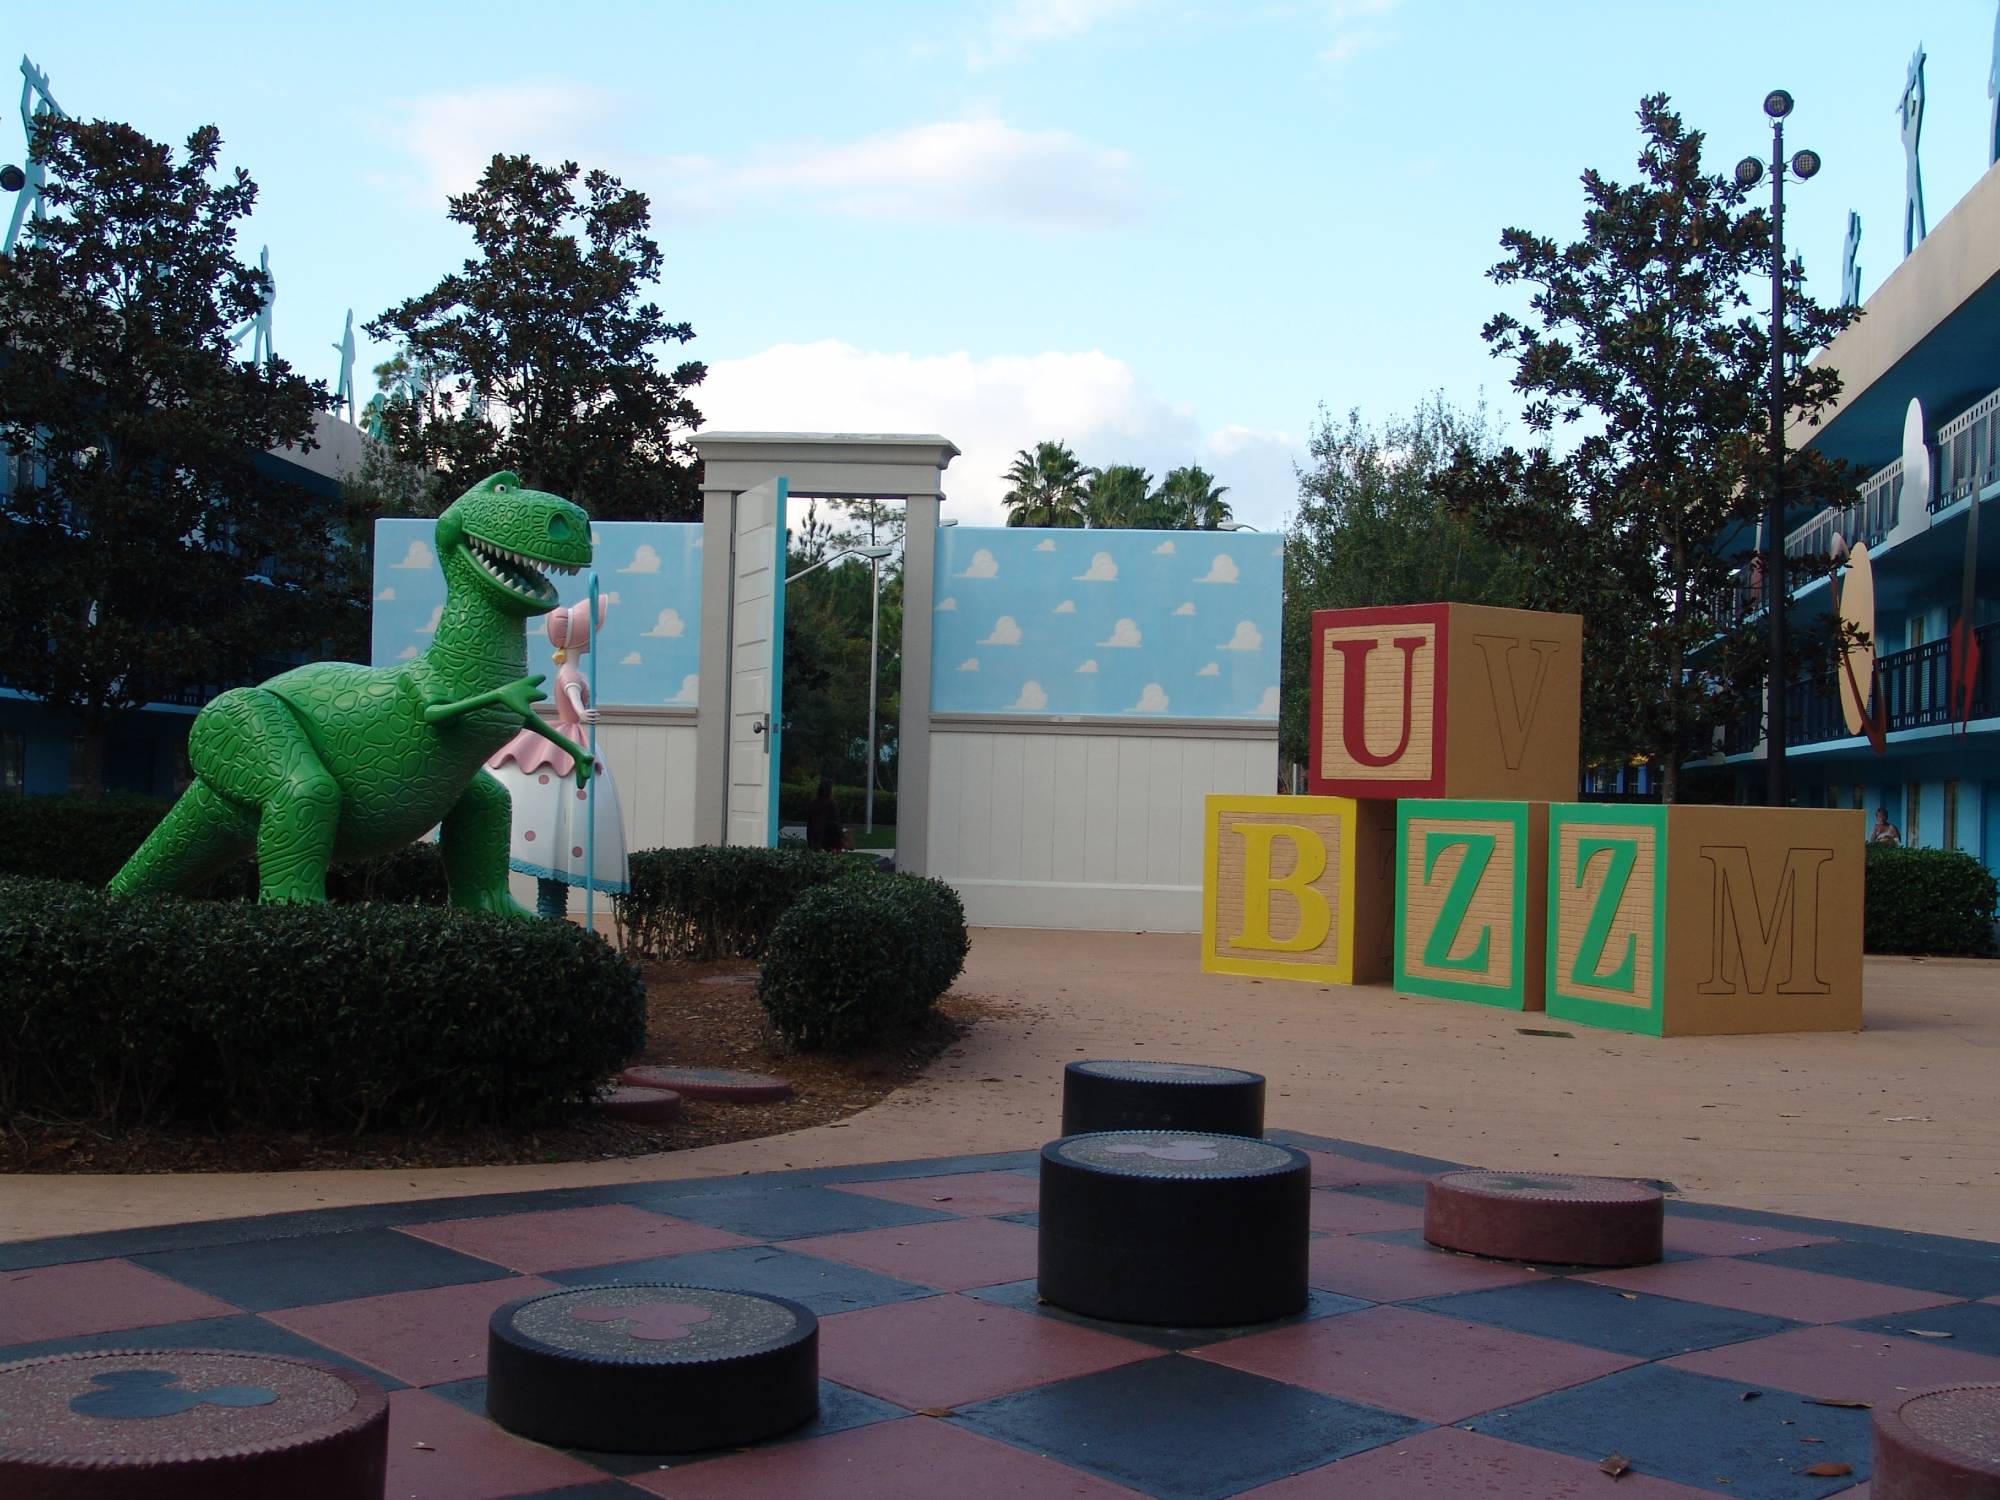 All Star Movies - Toy Story playground